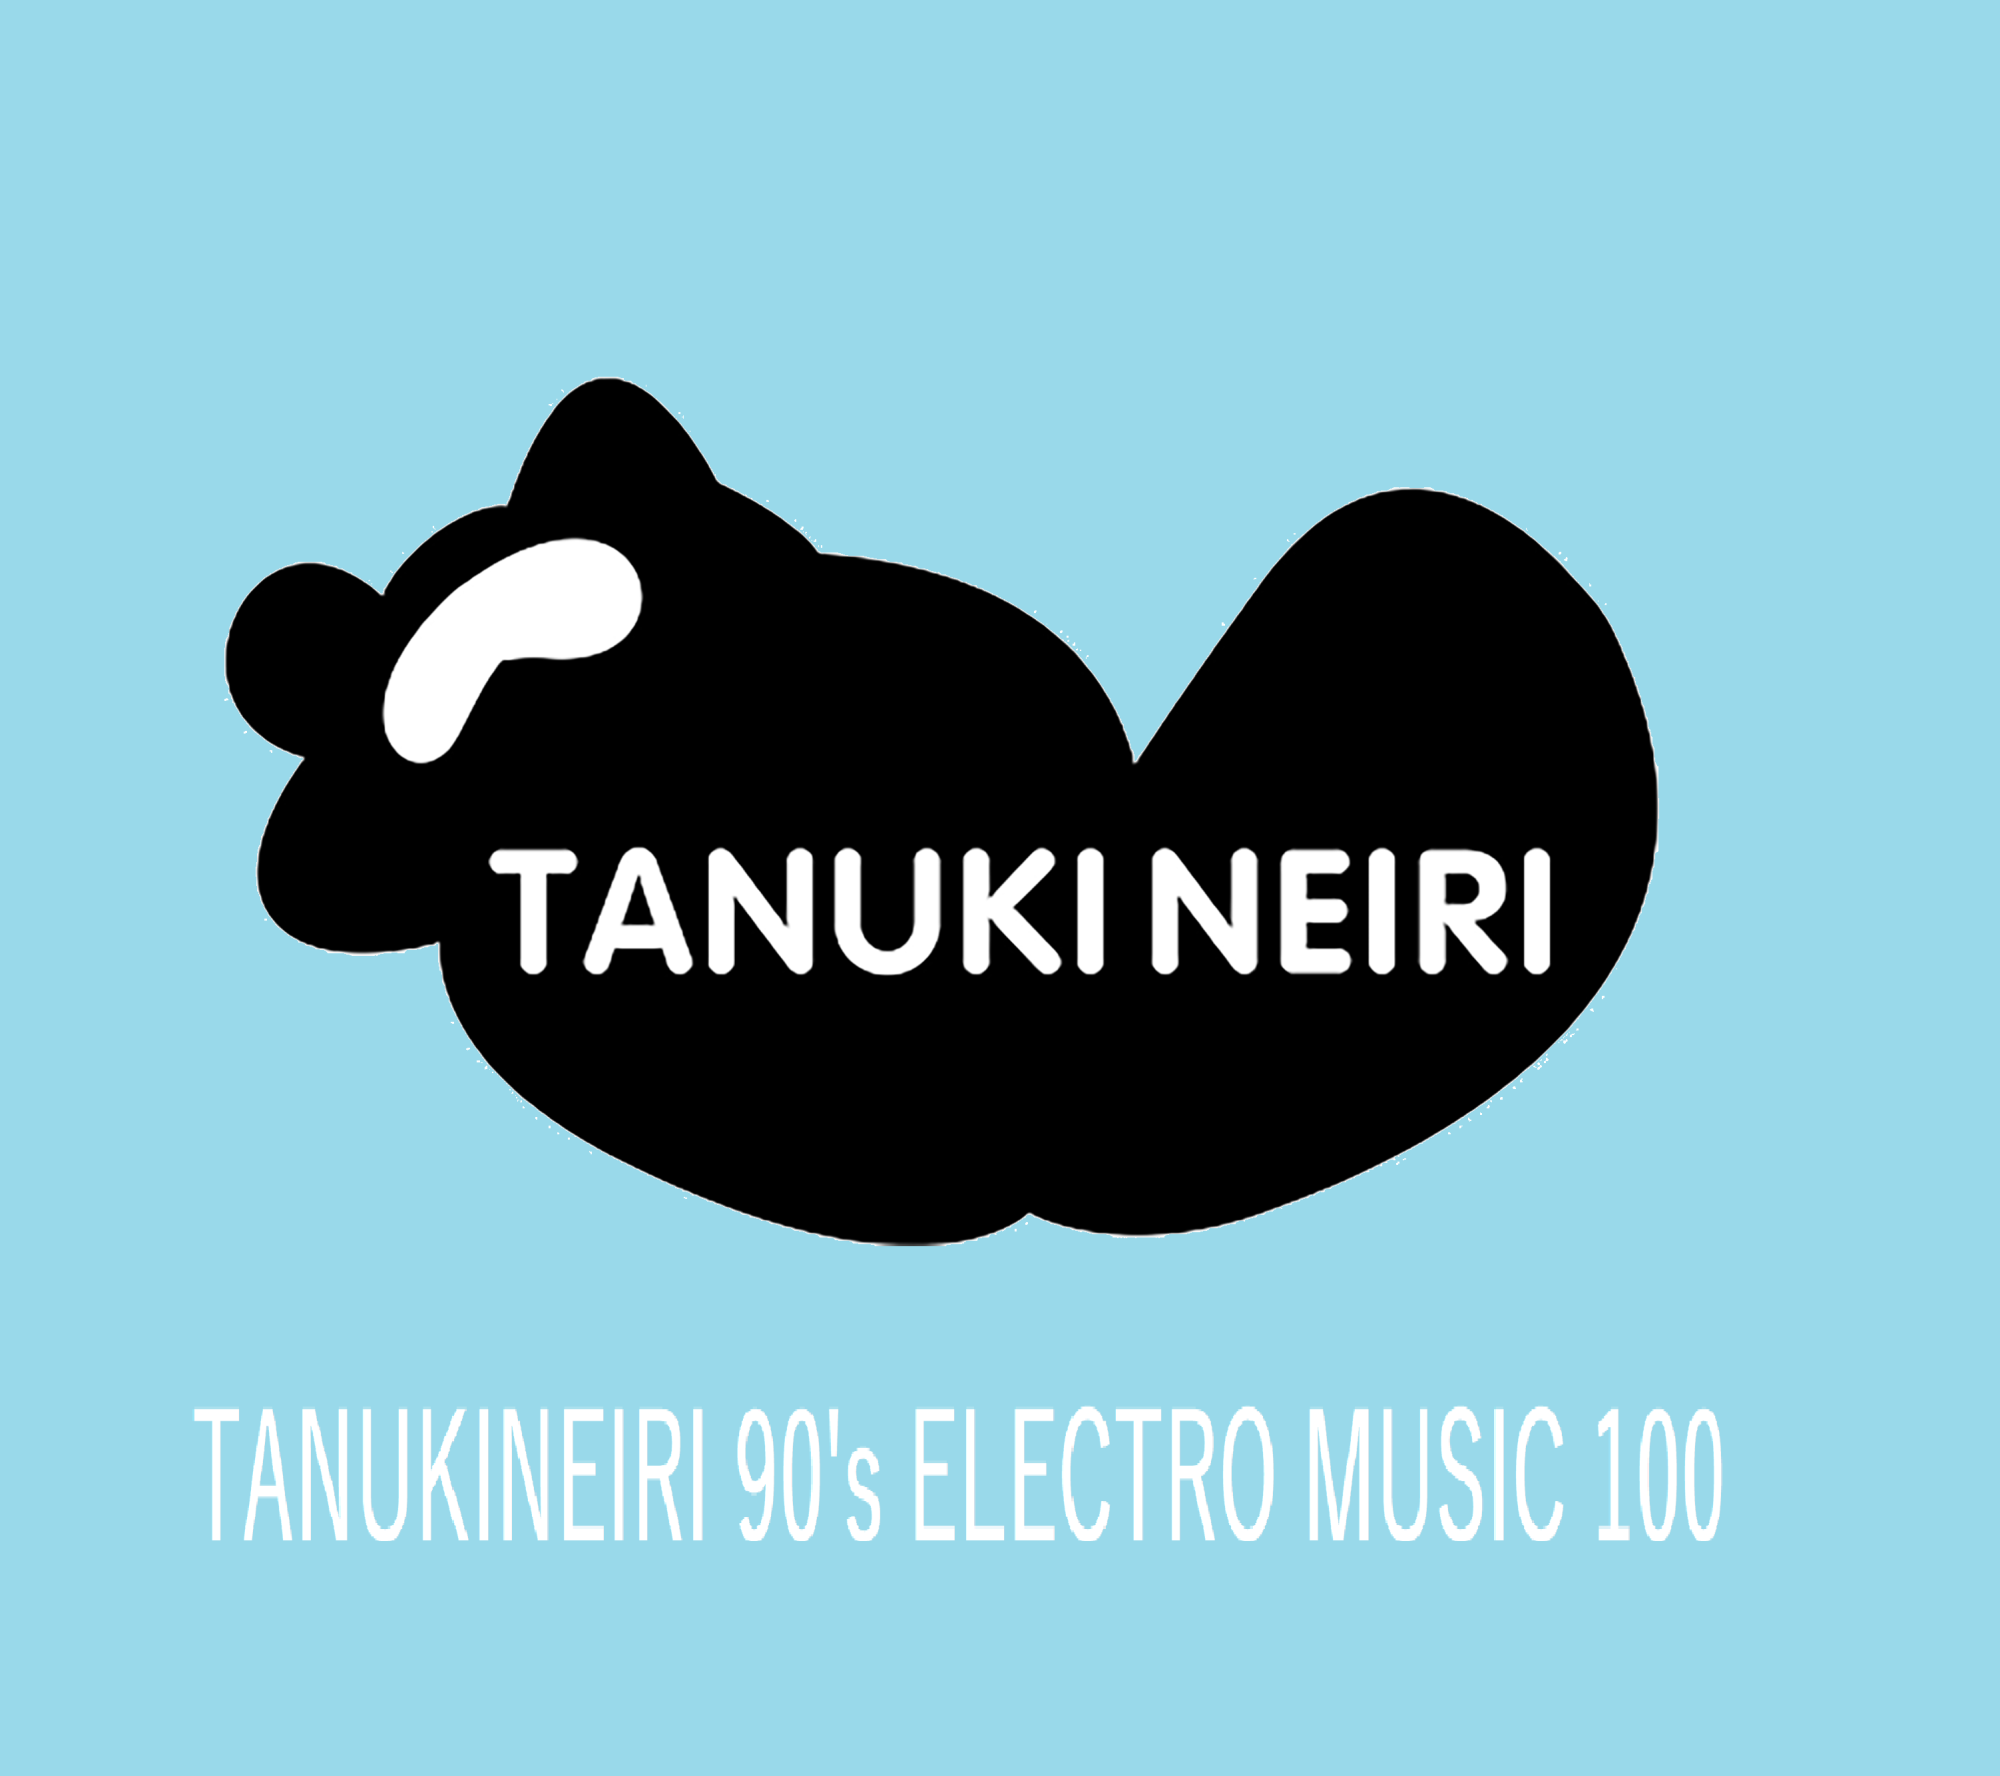 TANUKINEIRI 90'S ELECTRO MUSIC 100